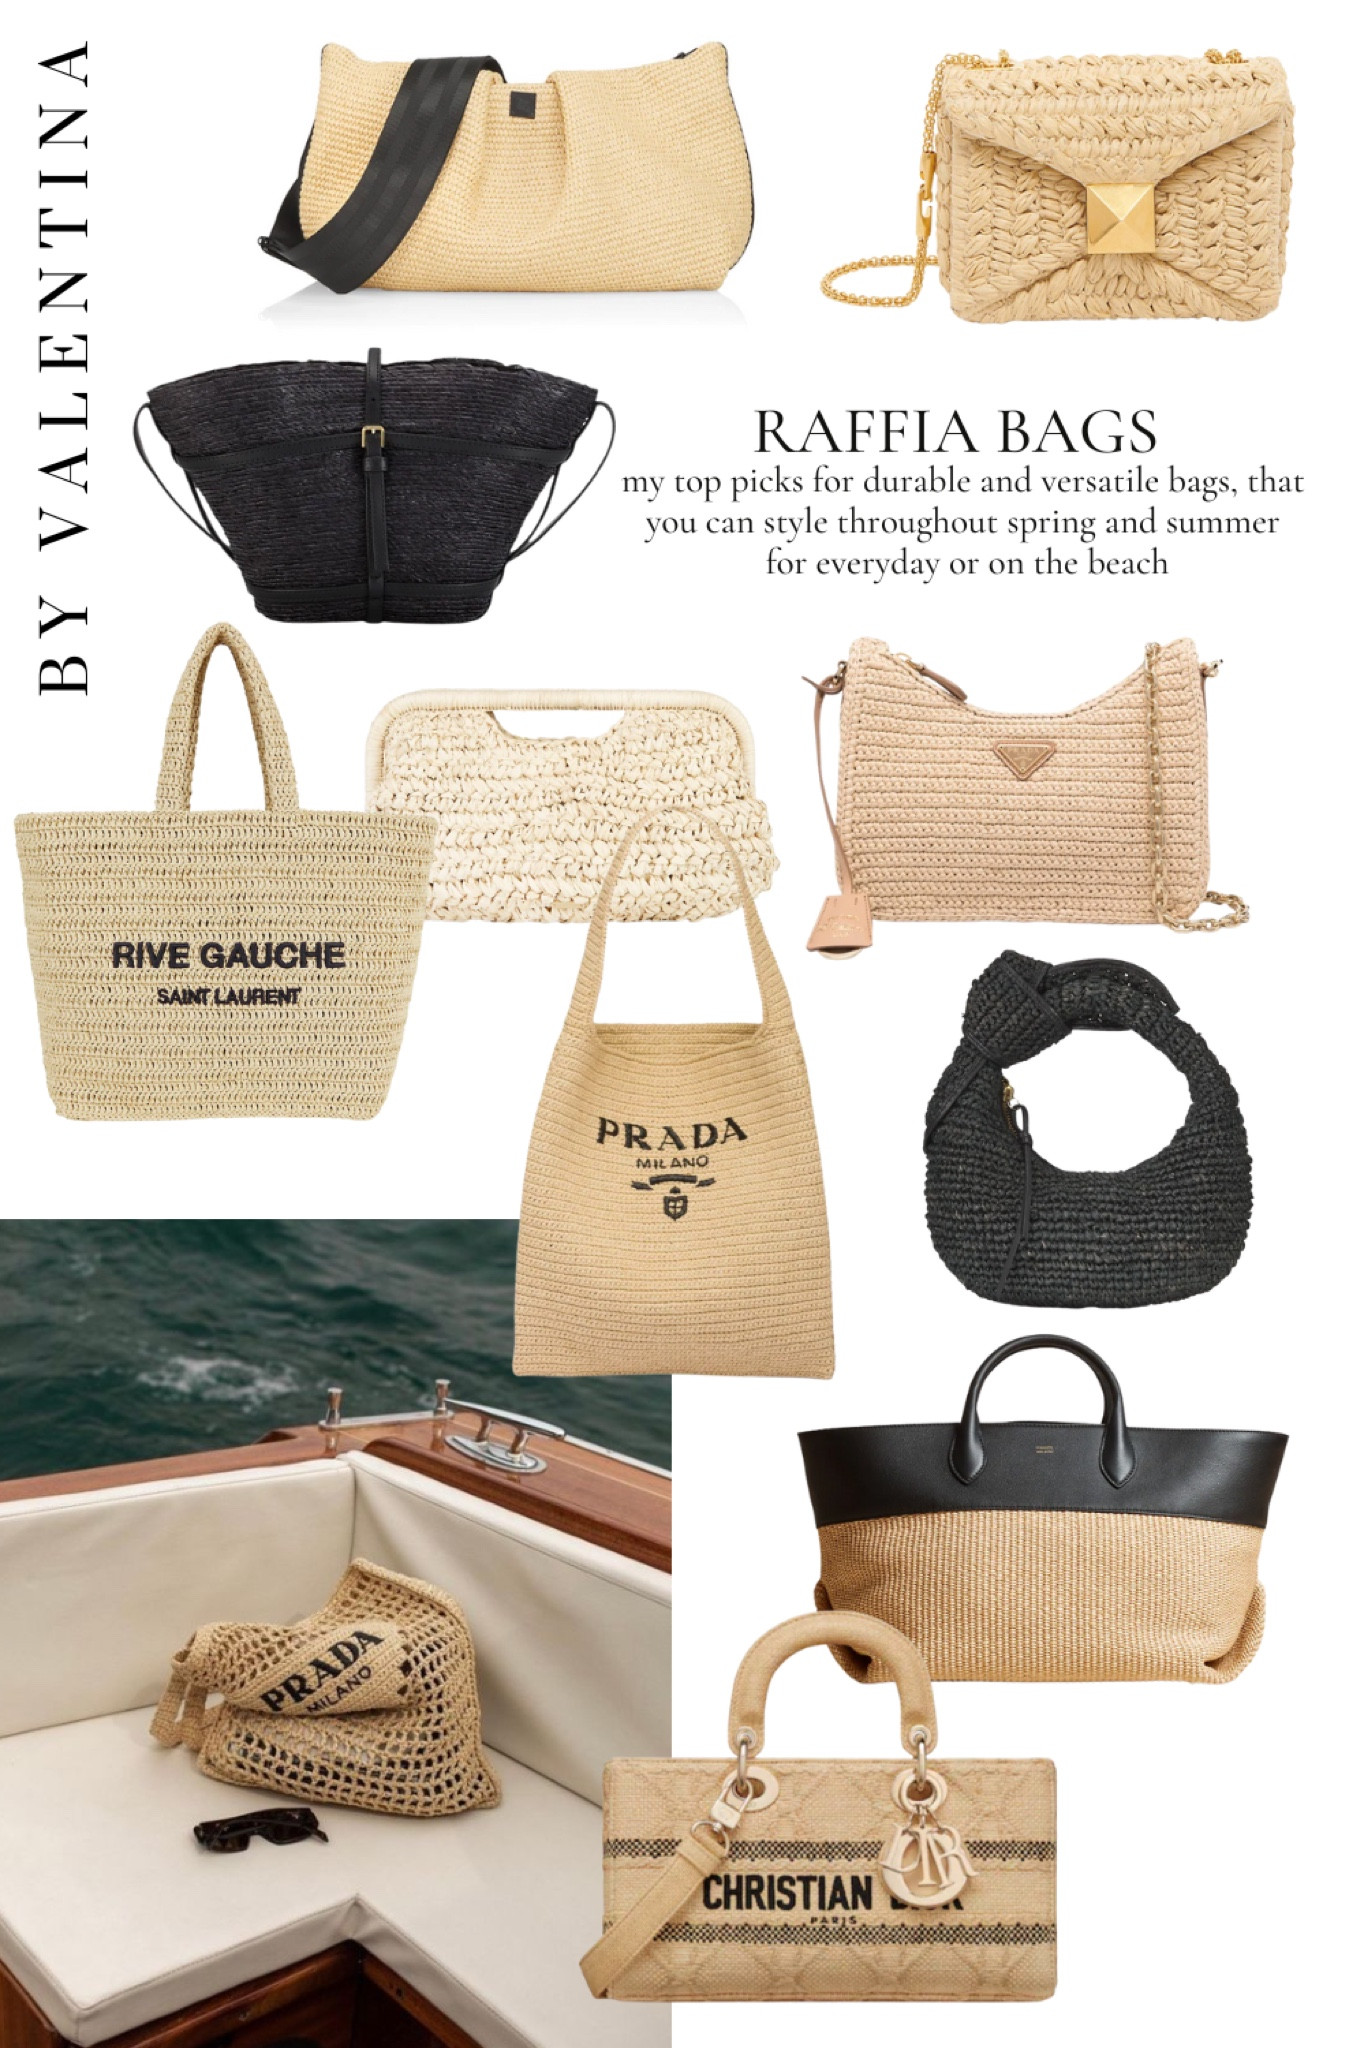 The New Prada Re-Edition 2005 Raffia Bag Has Summer Written All